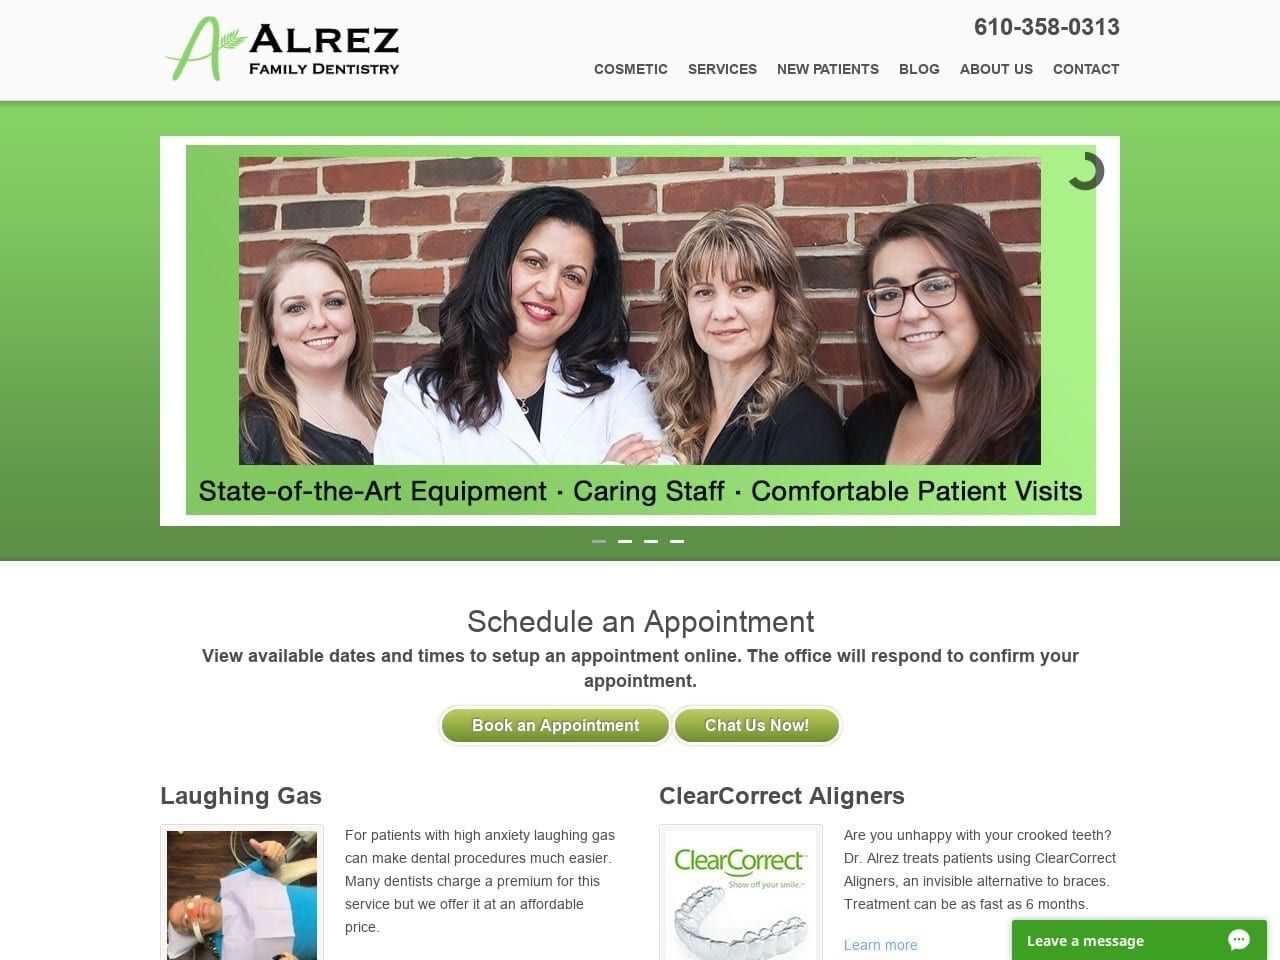 Alrez Family Dentist Website Screenshot from alrezfamilydentistry.com